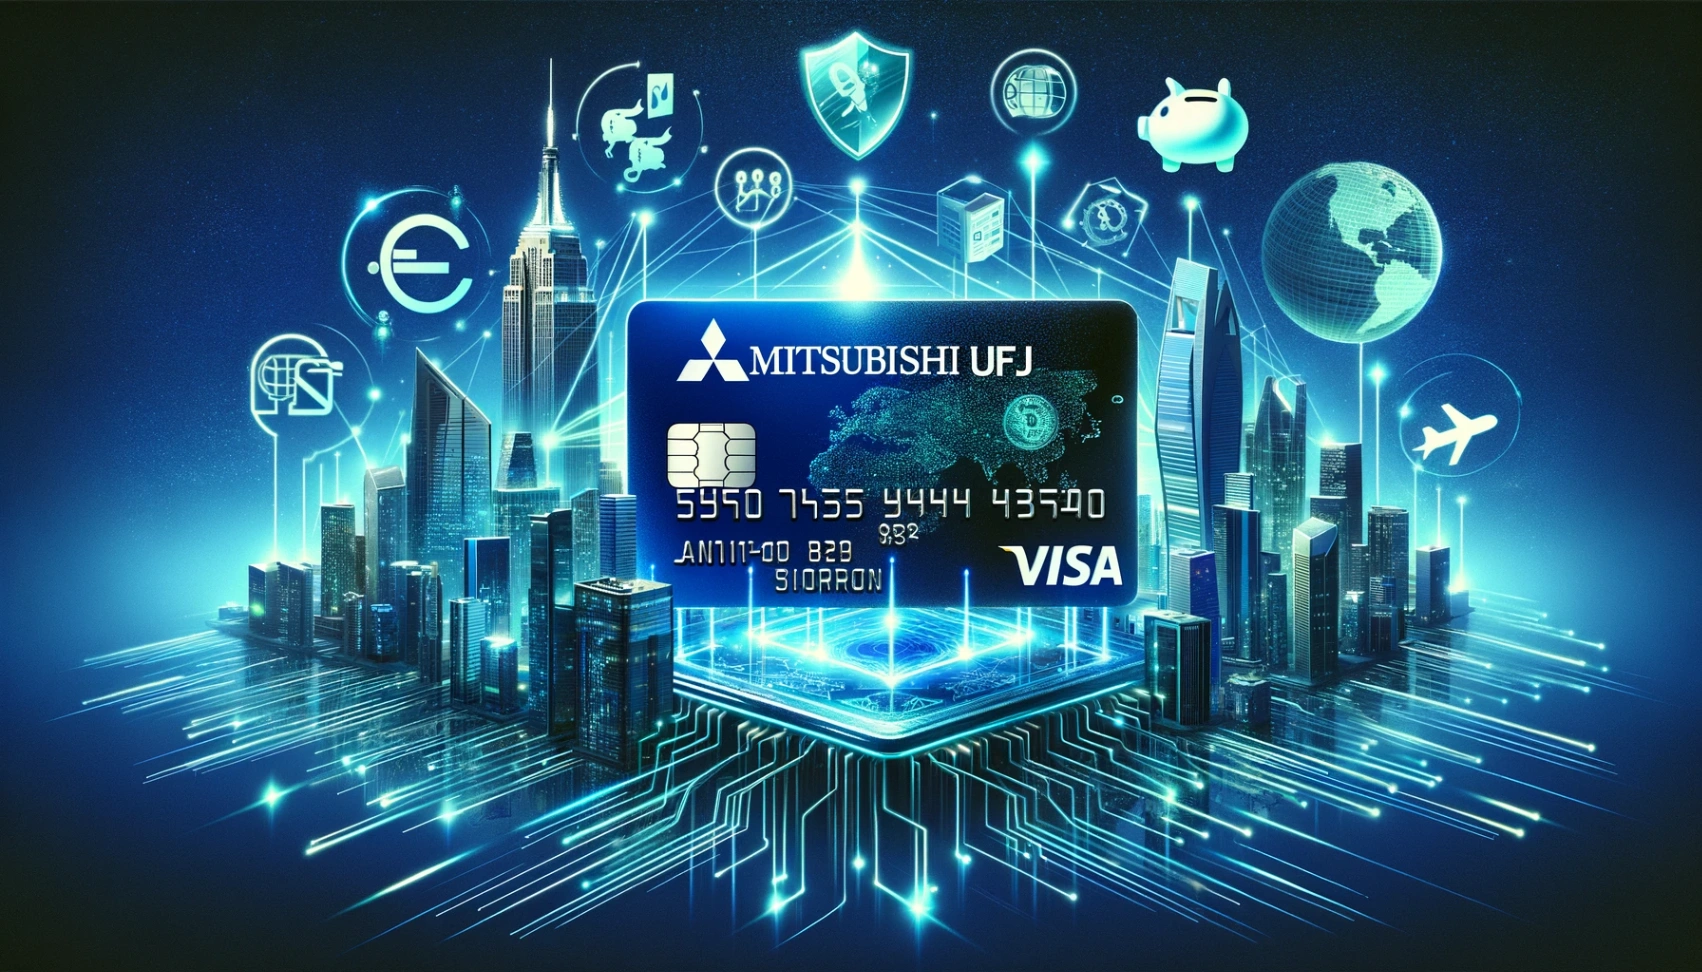 Mitsubishi UFJ-VISA Card – Learn How to Easily Apply